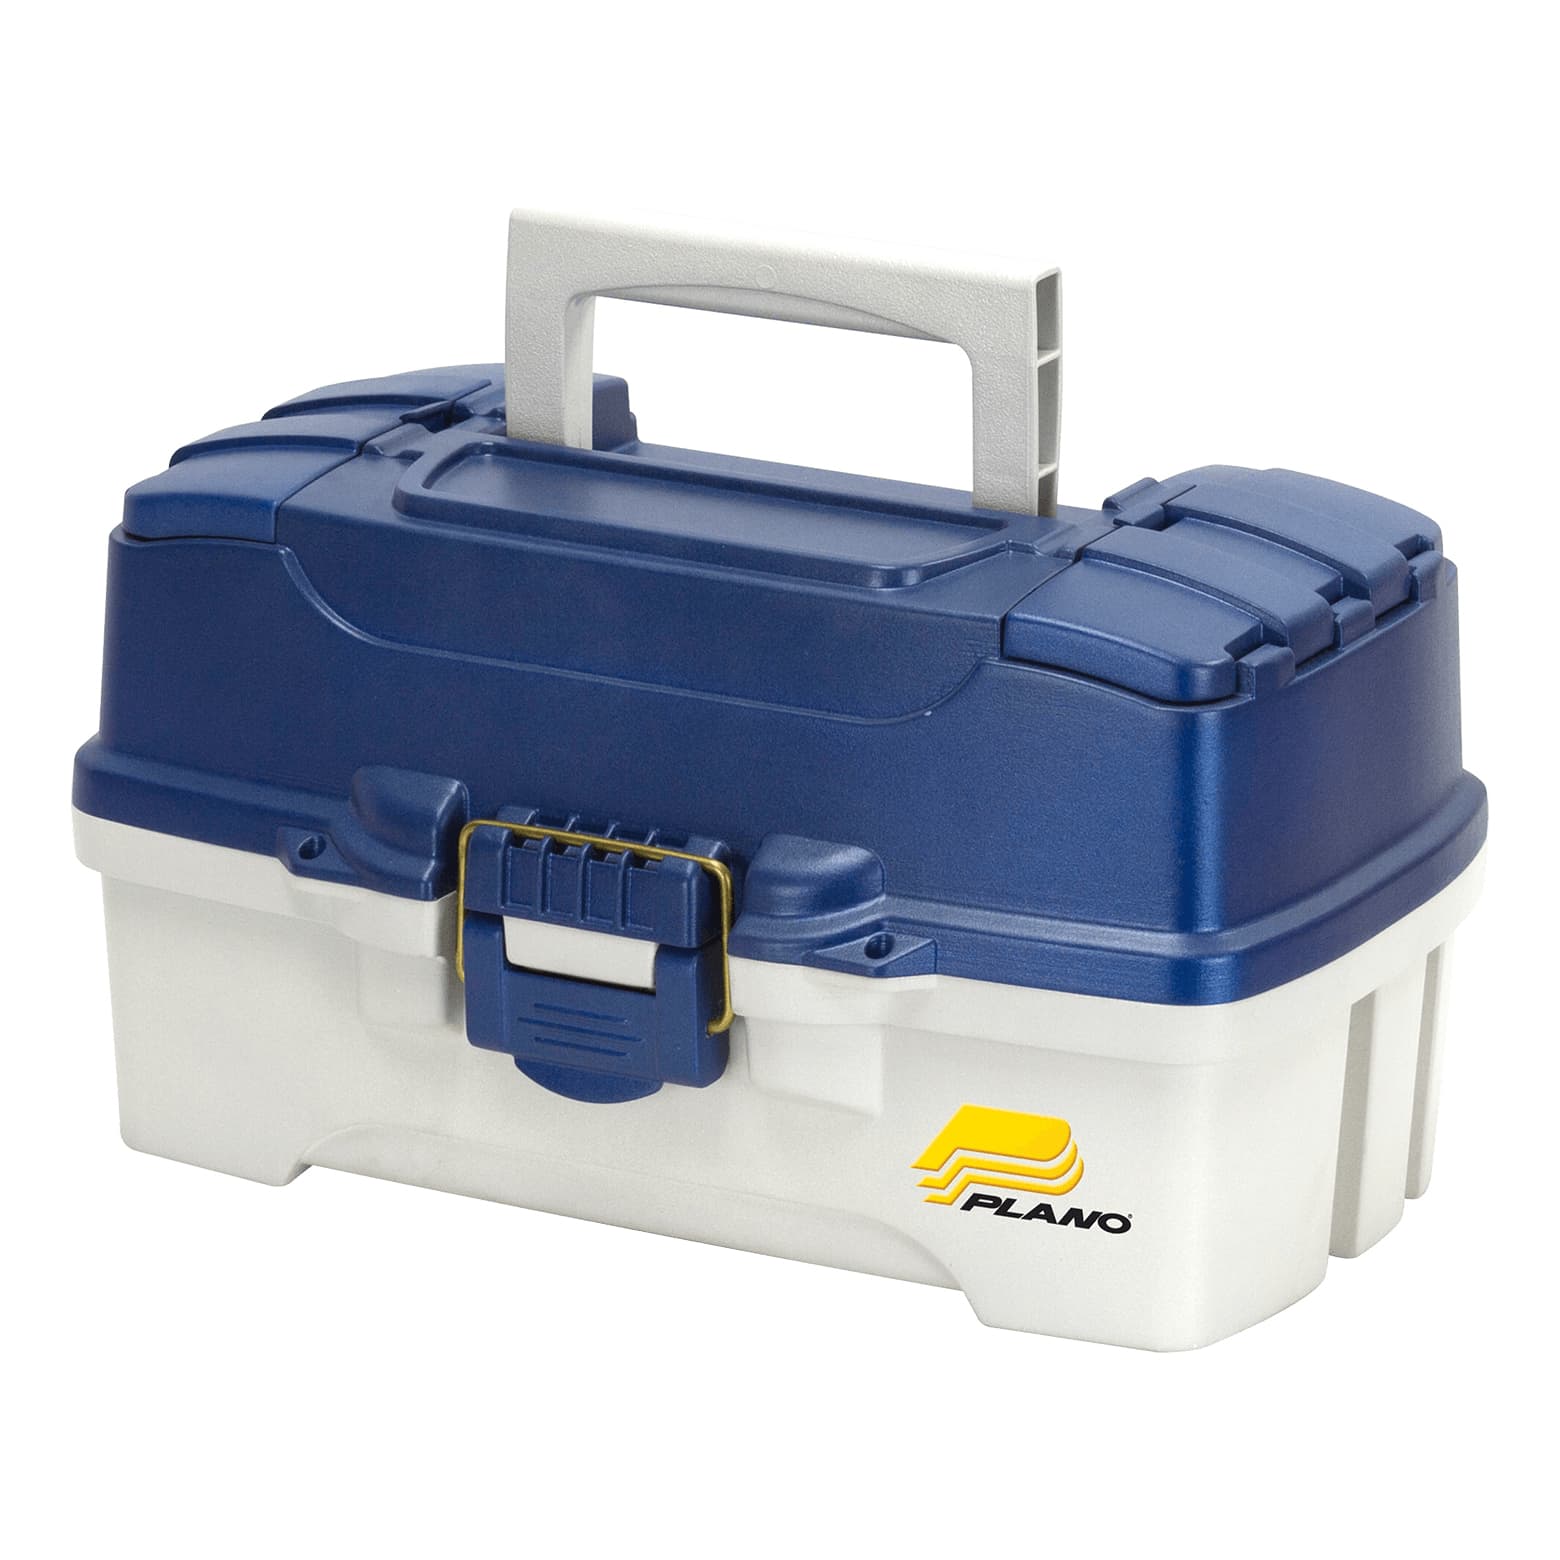 Plano® Two-Tray Tackle Box | Cabela's Canada